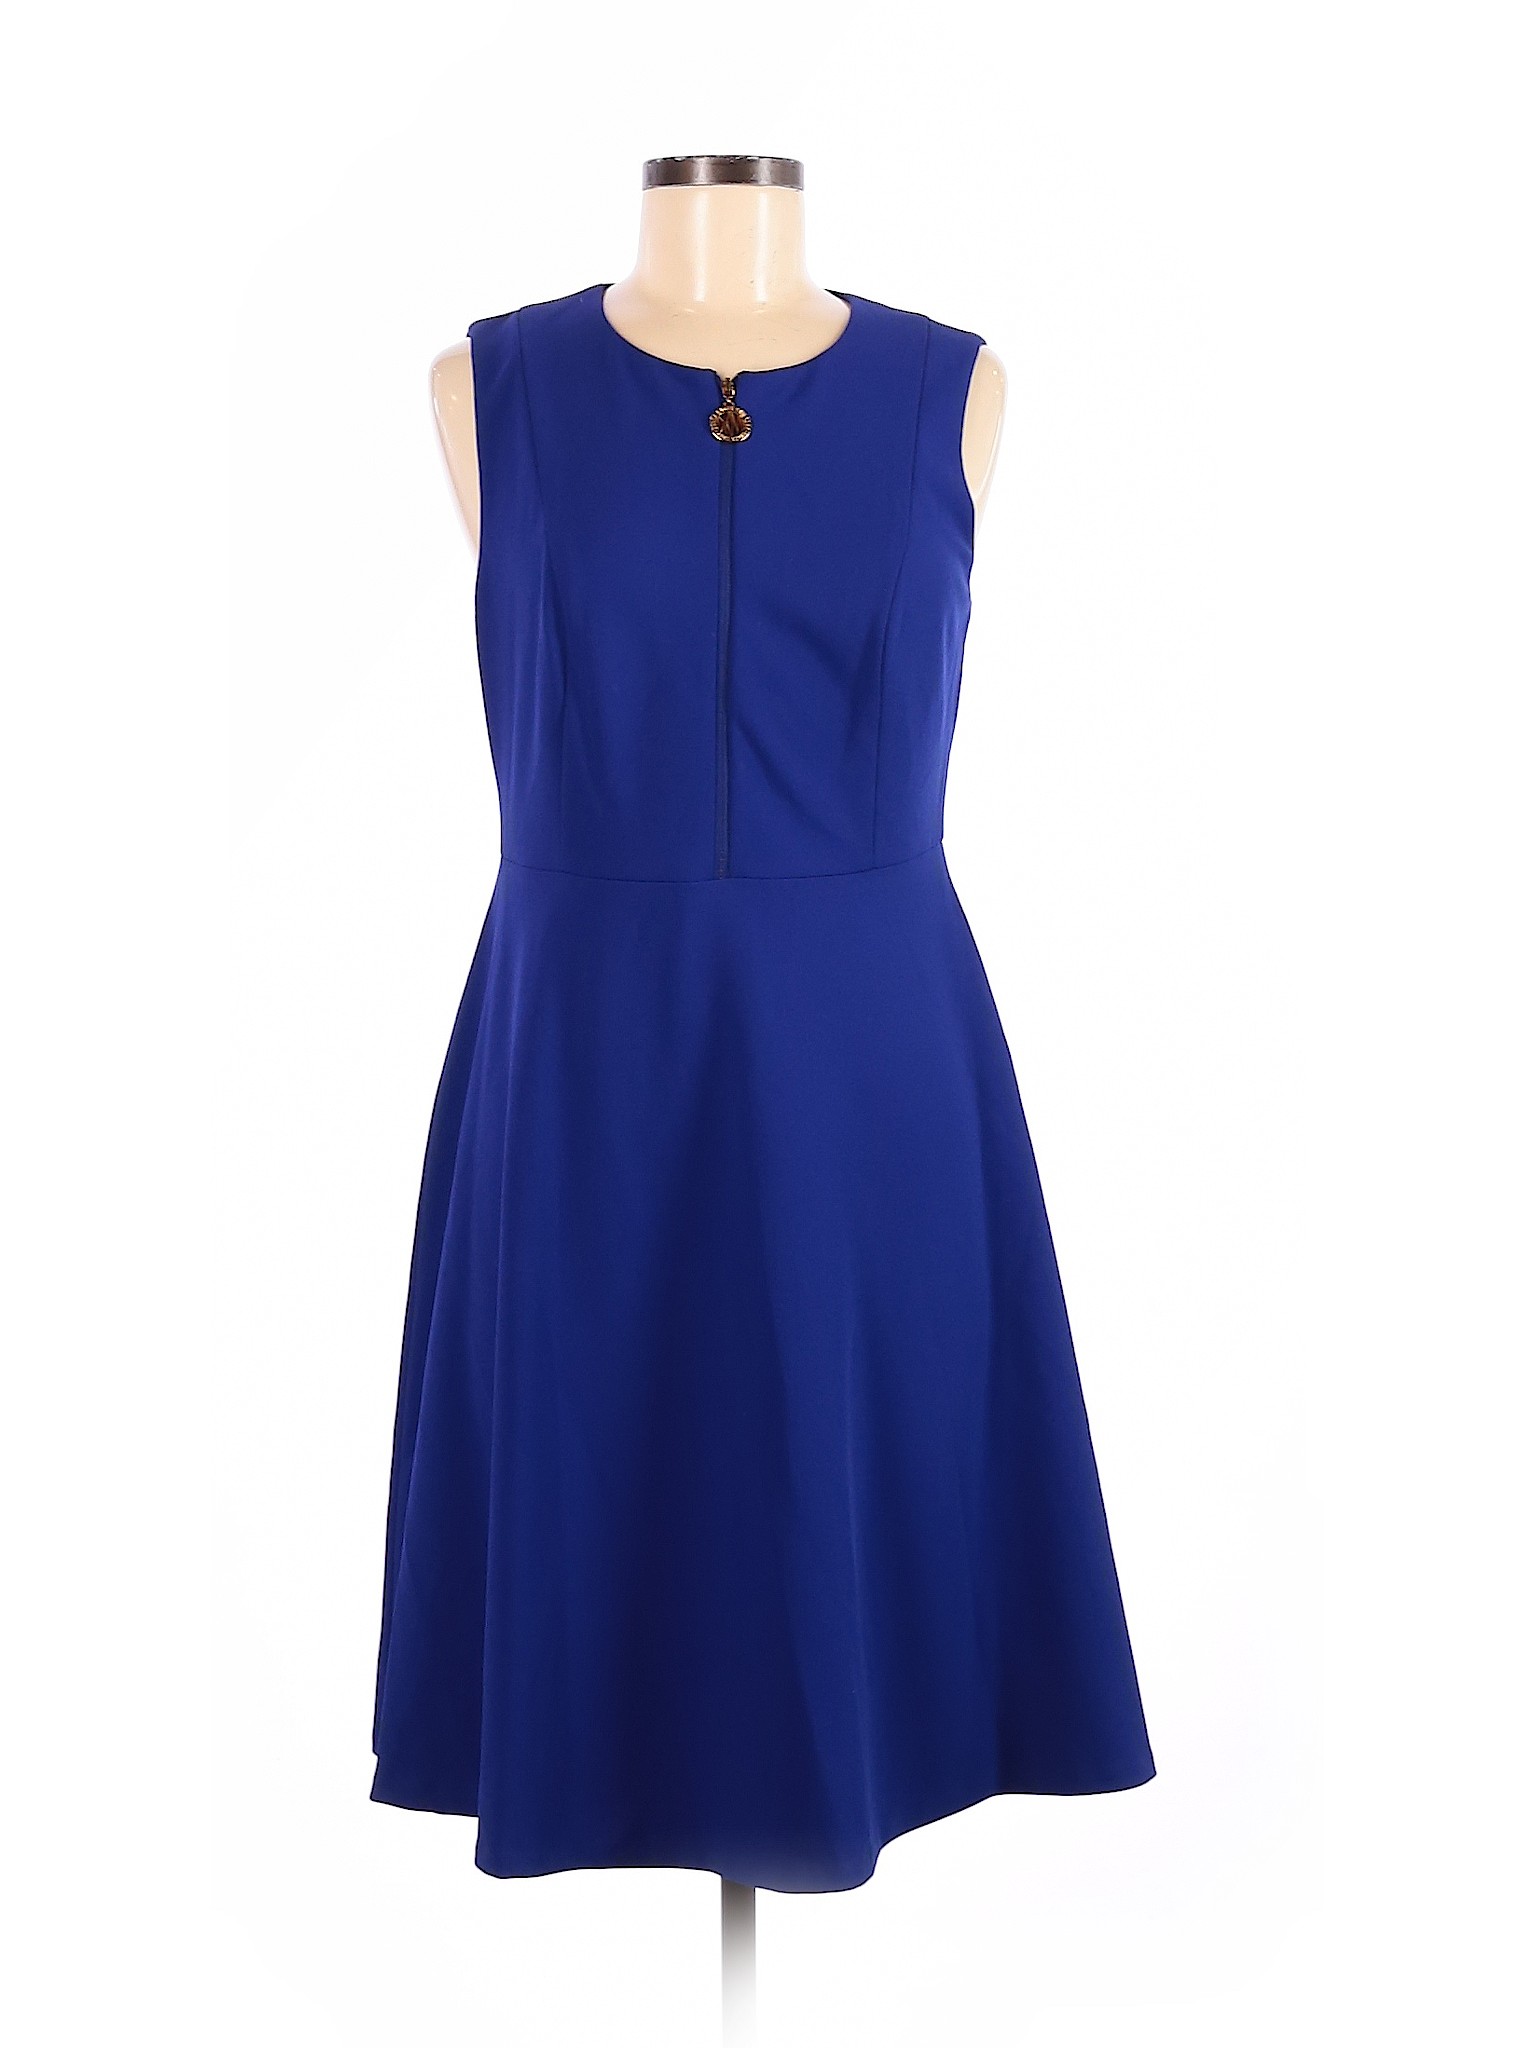 DKNY Women Blue Cocktail Dress 8 | eBay